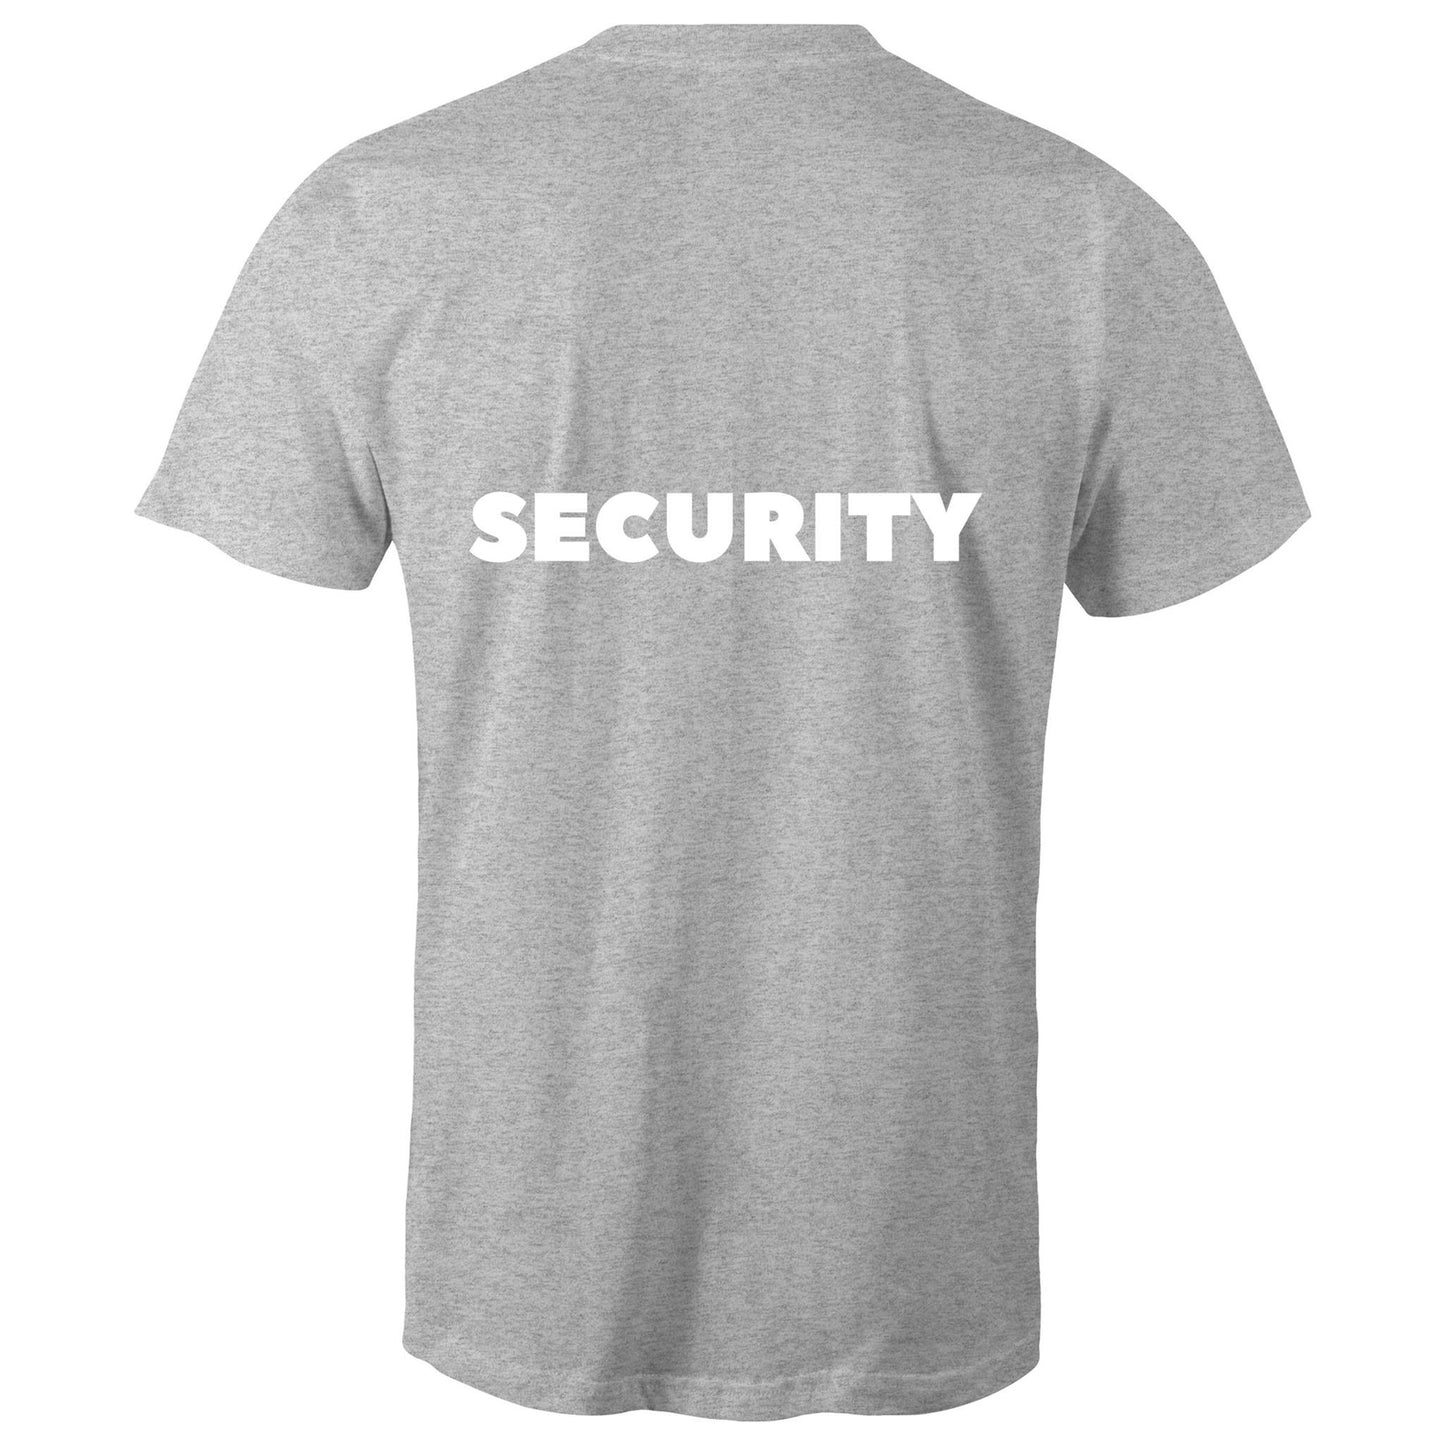 SECURITY - Unisex T-Shirt